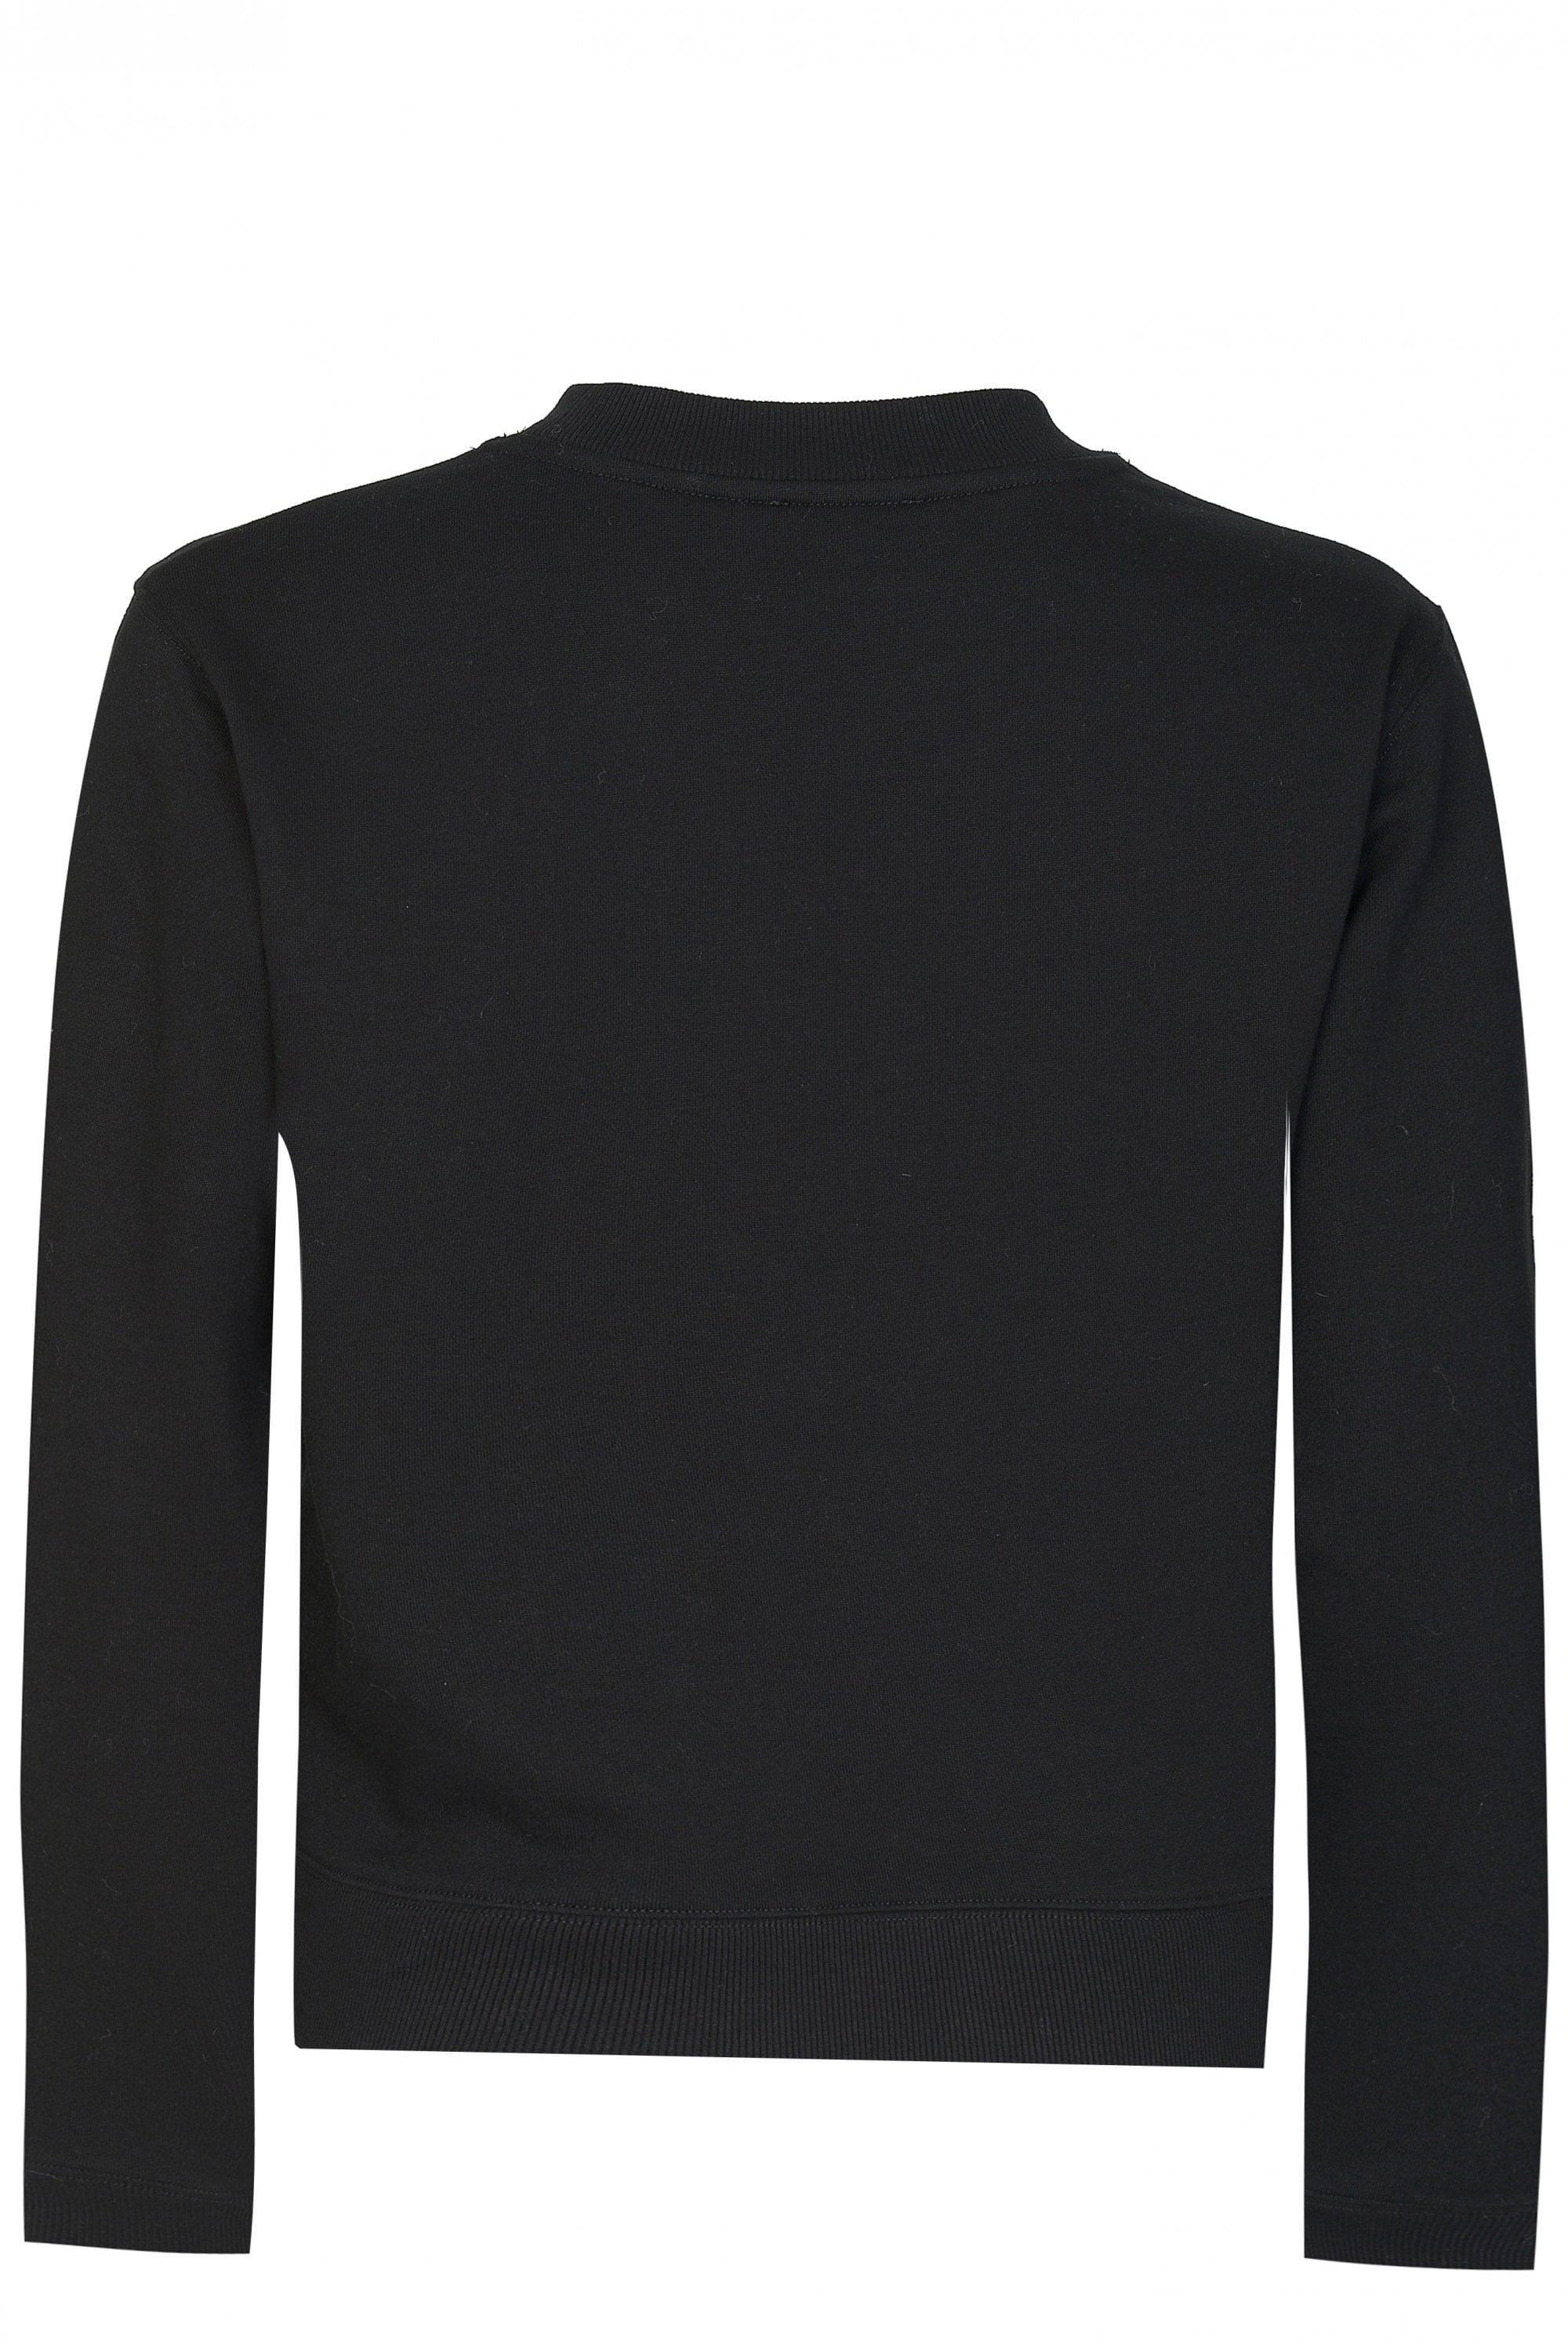 Black Ribbon Logo - Emporio Armani Ribbon Logo Sweatshirt in Black for Men